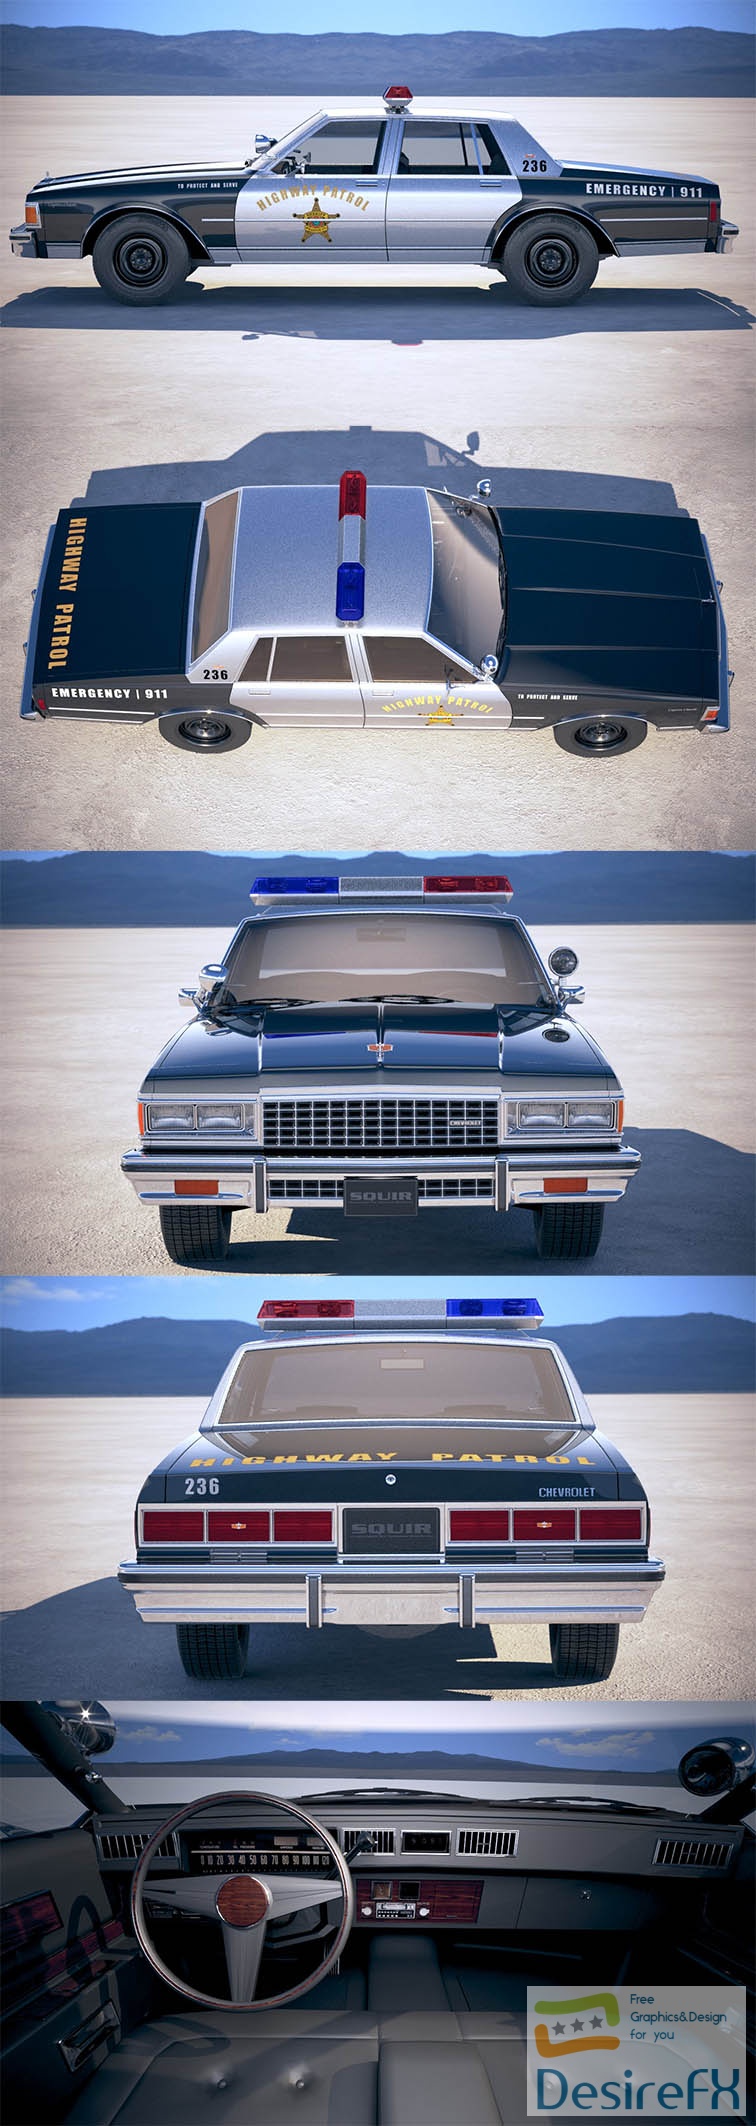 Classic Police Car 1978